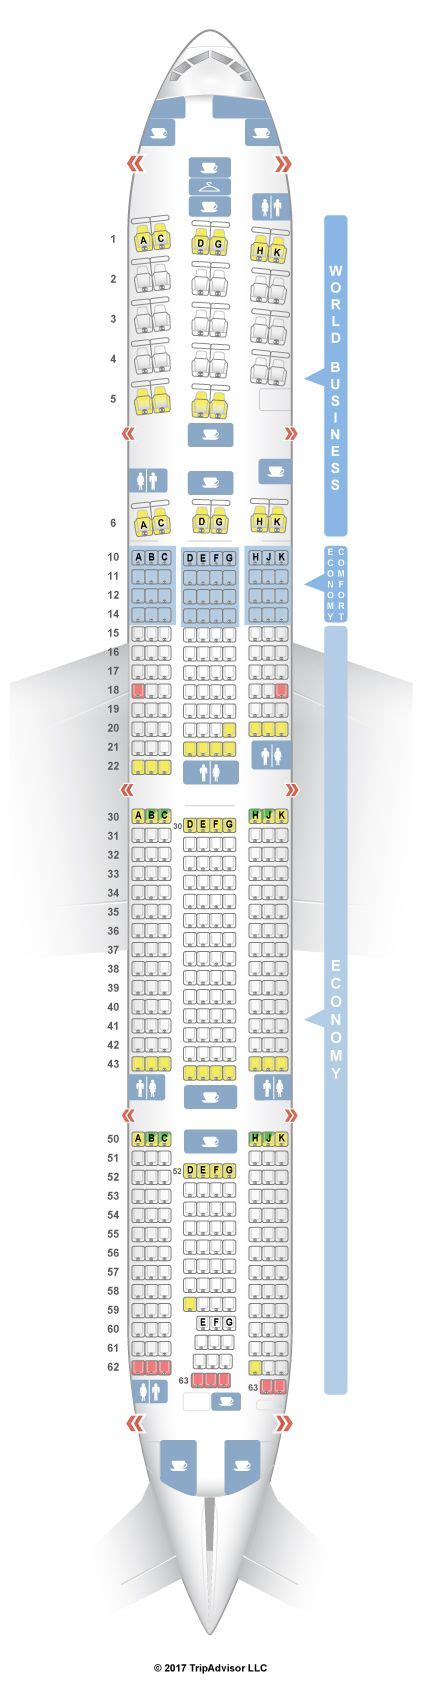 Seatguru Seat Map Klm Boeing 777 300er 77w Seatguru Seatguru